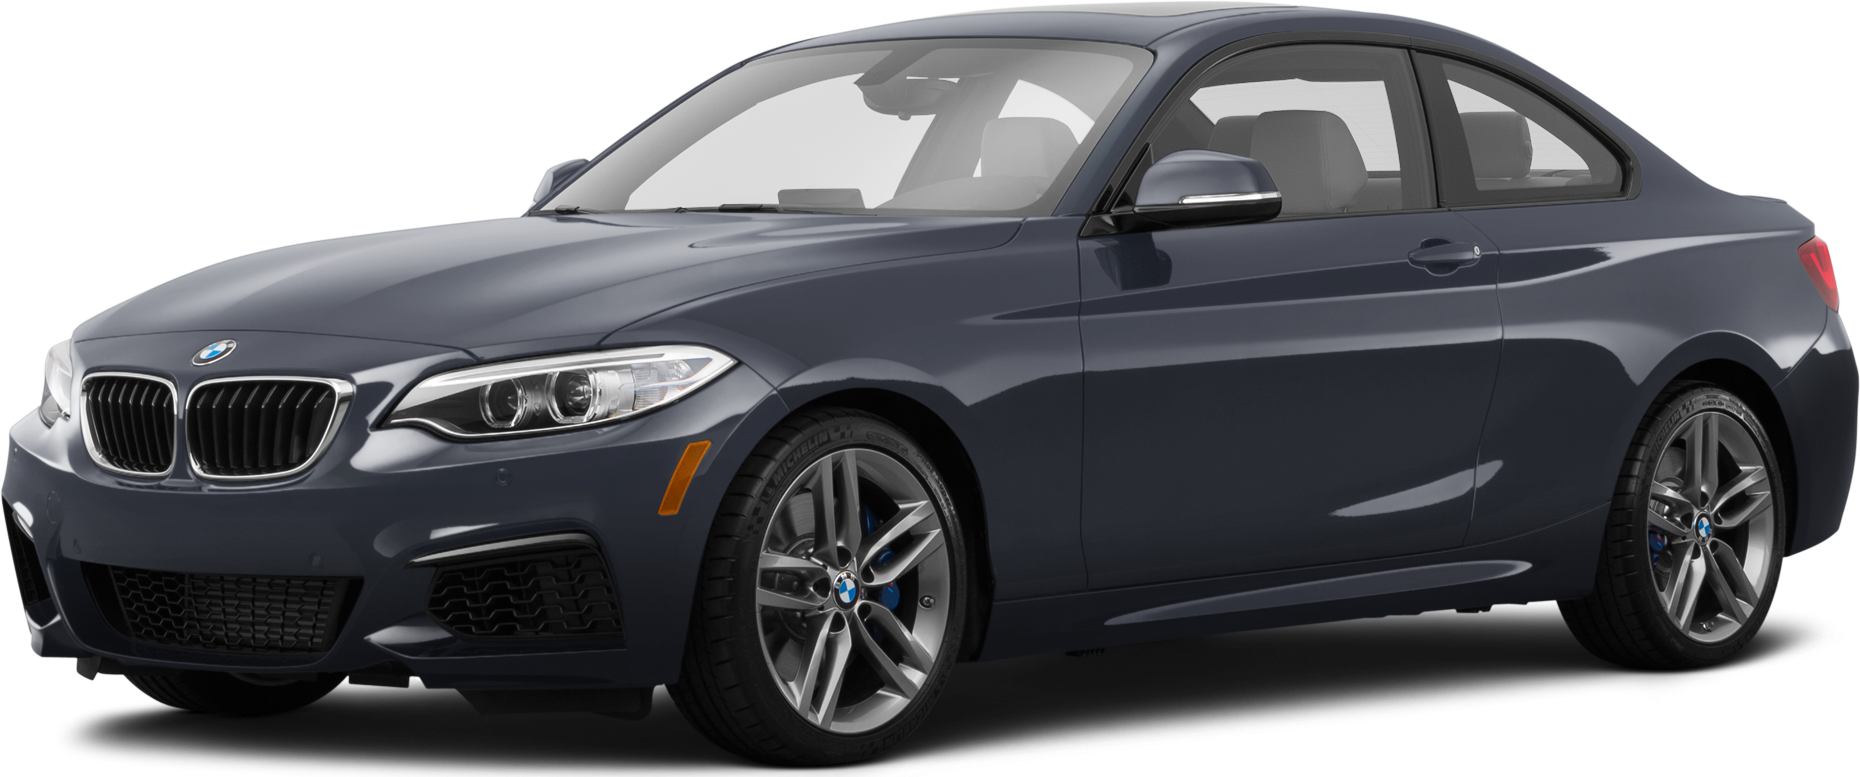 2015 BMW 2 Series Price, Value, Ratings & Reviews